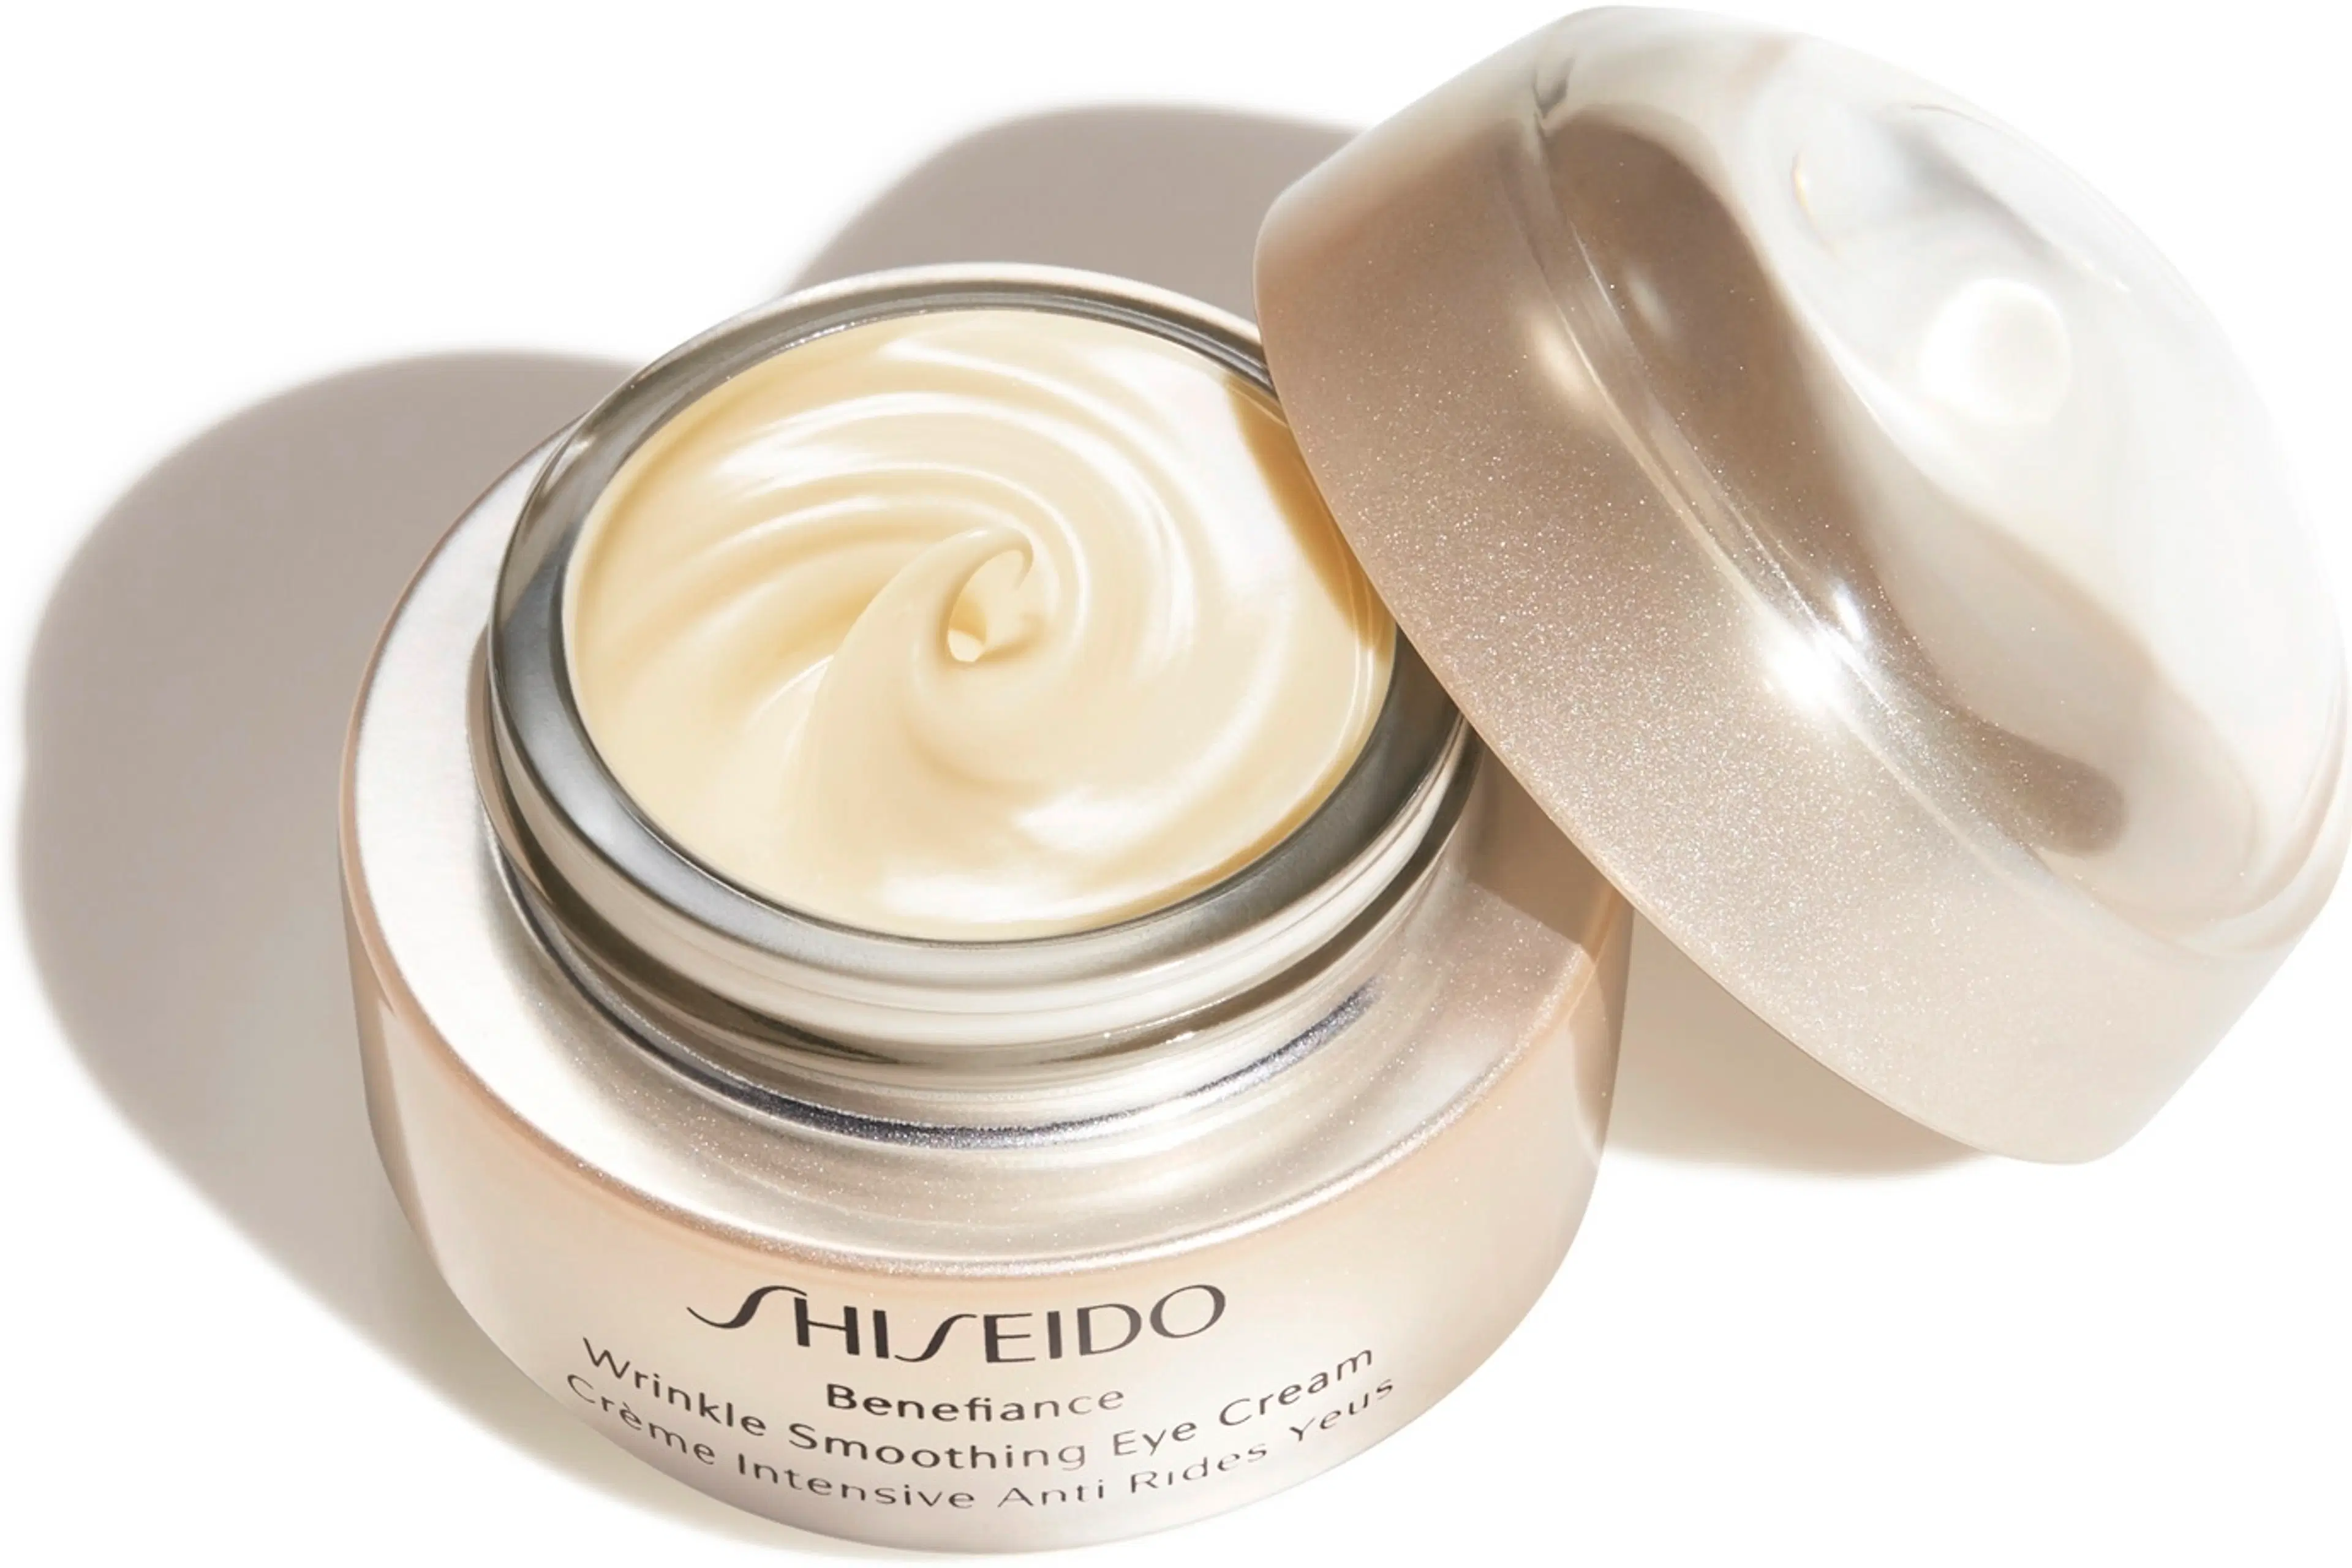 Shiseido Benefiance Wrinkle Smoothing Eye Cream silmänympärysvoide 15 ml